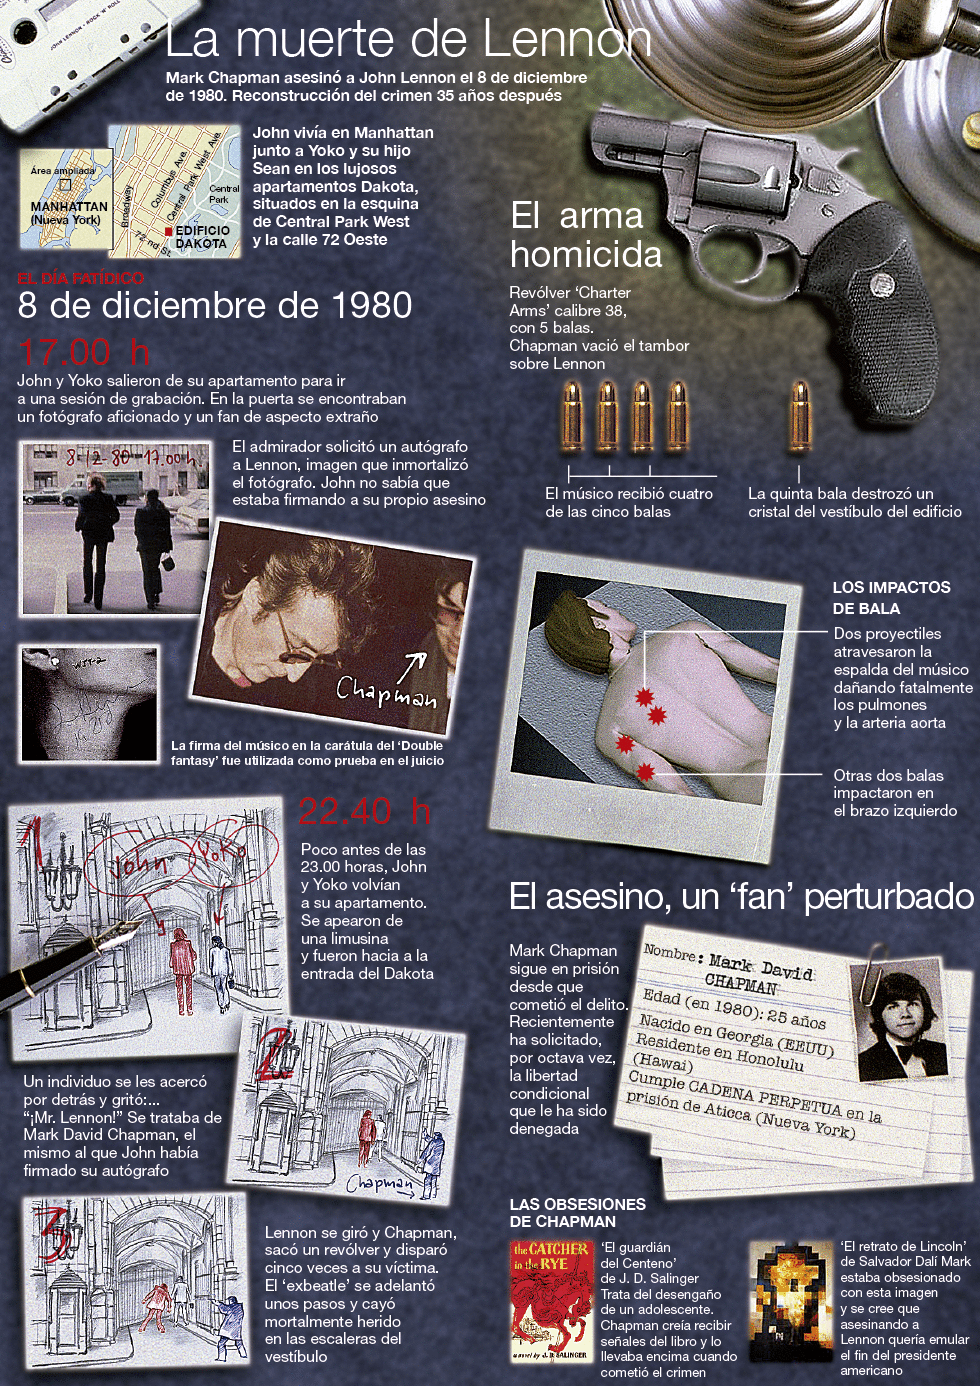 reconstruccin del asesinato de John Lennon el 8 de diciembre de 1980